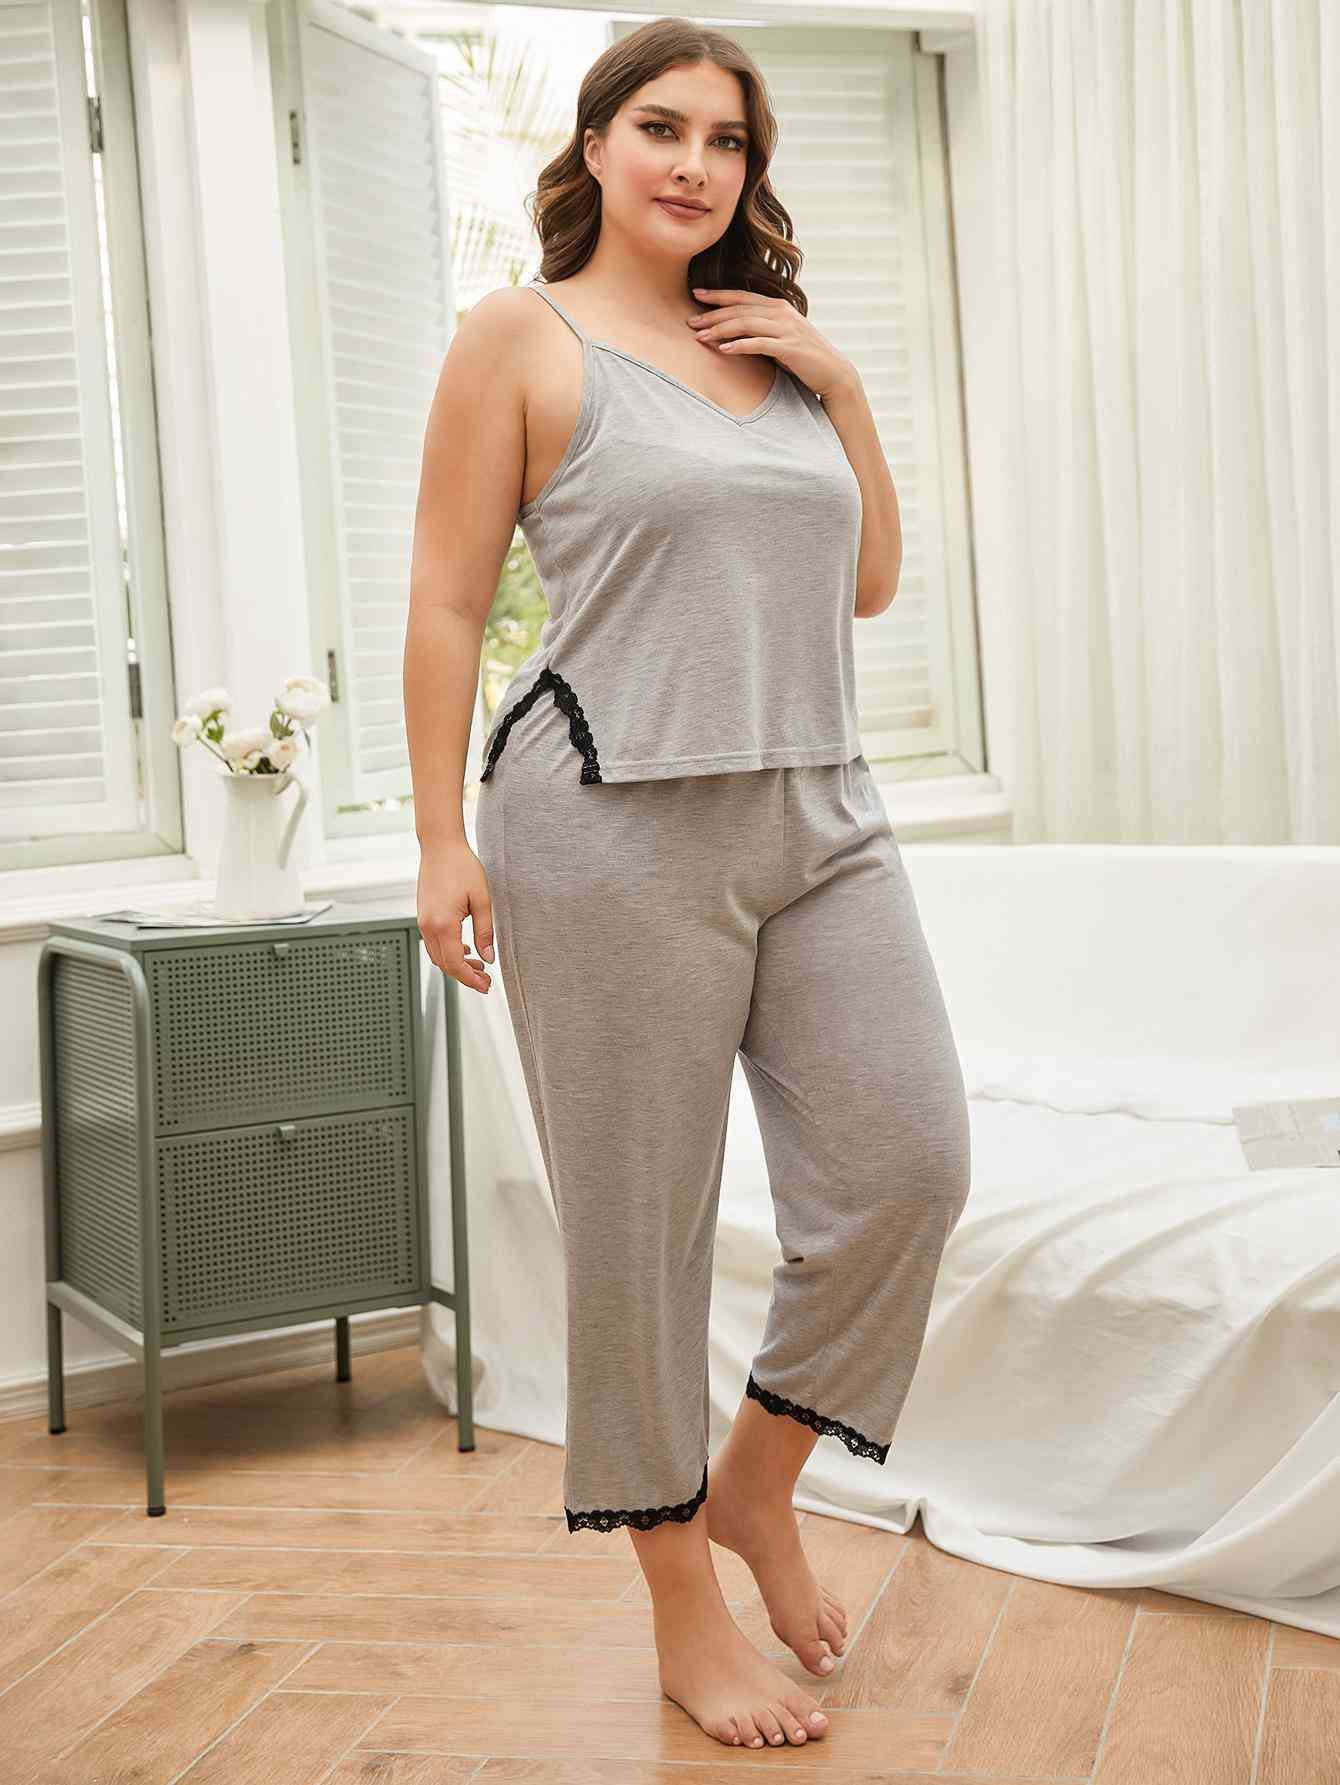 Model wearing gray spaghetti strap pajama set